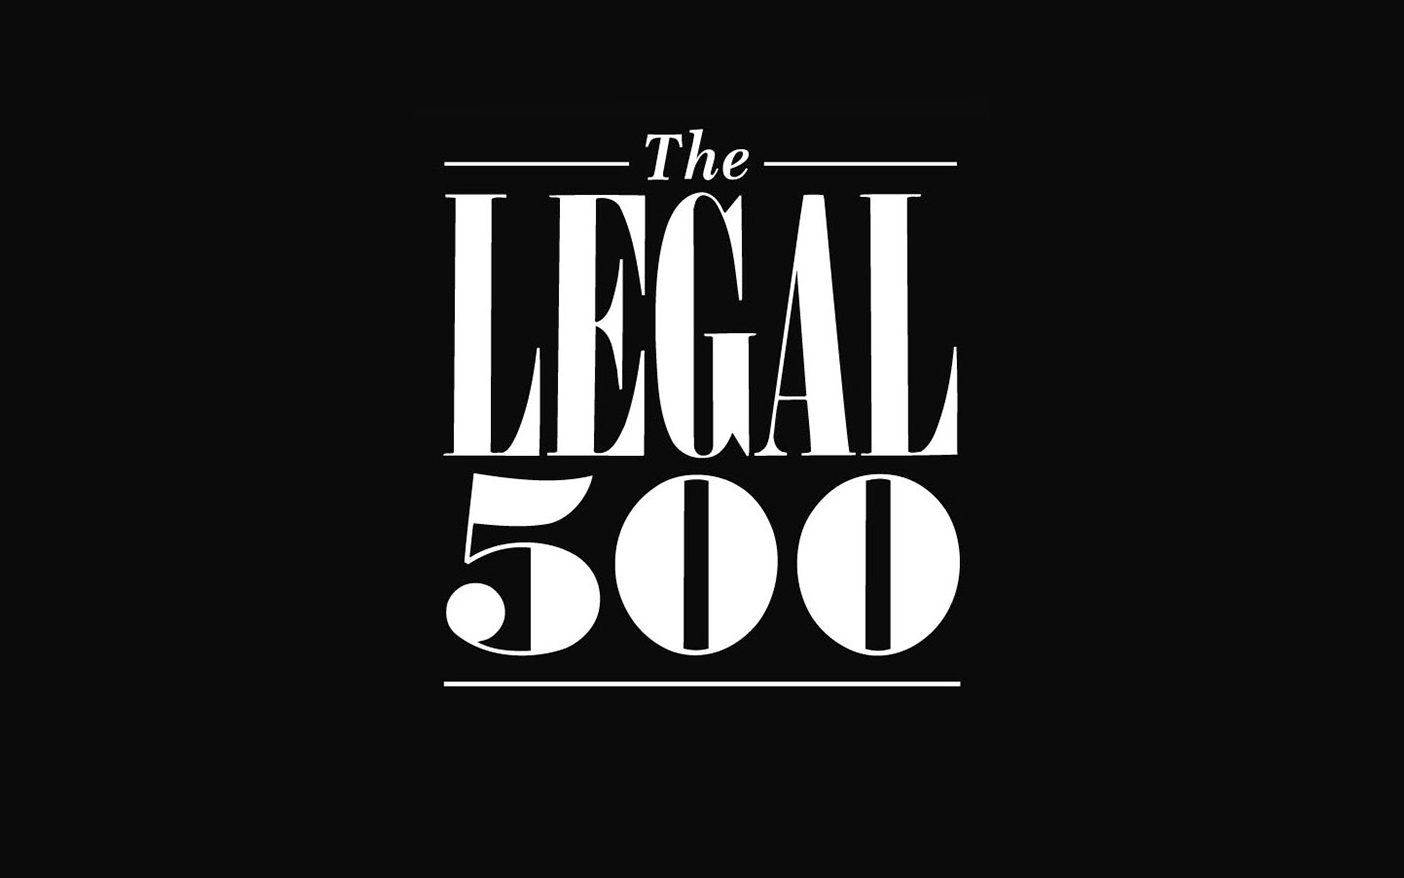 Legal 500 ranks Harcus Parker Band 2 in Group Litigation